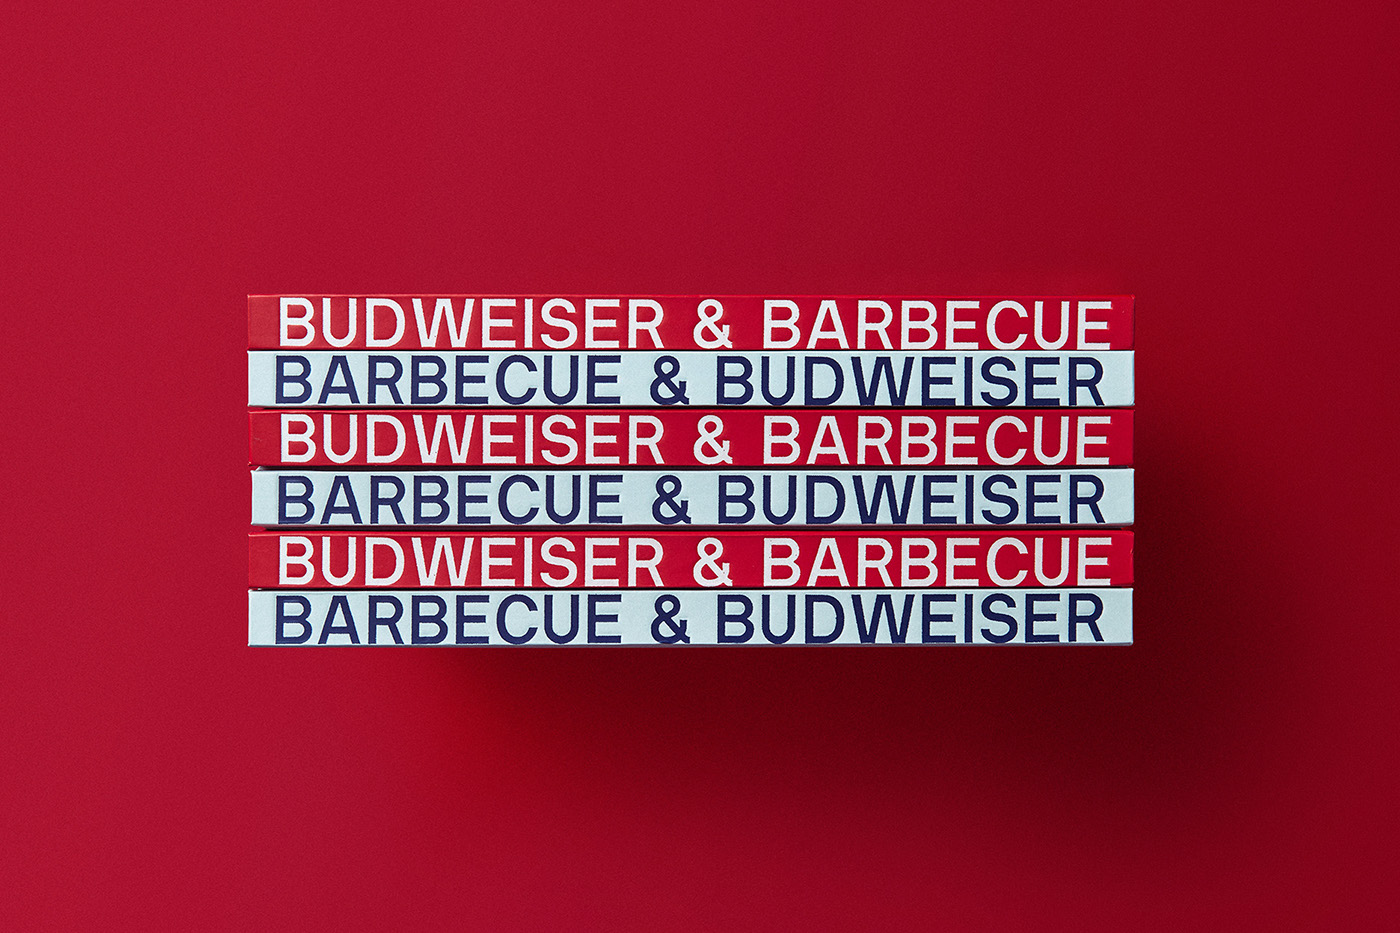 rgb-creative-Budweiser-Barbecue-4